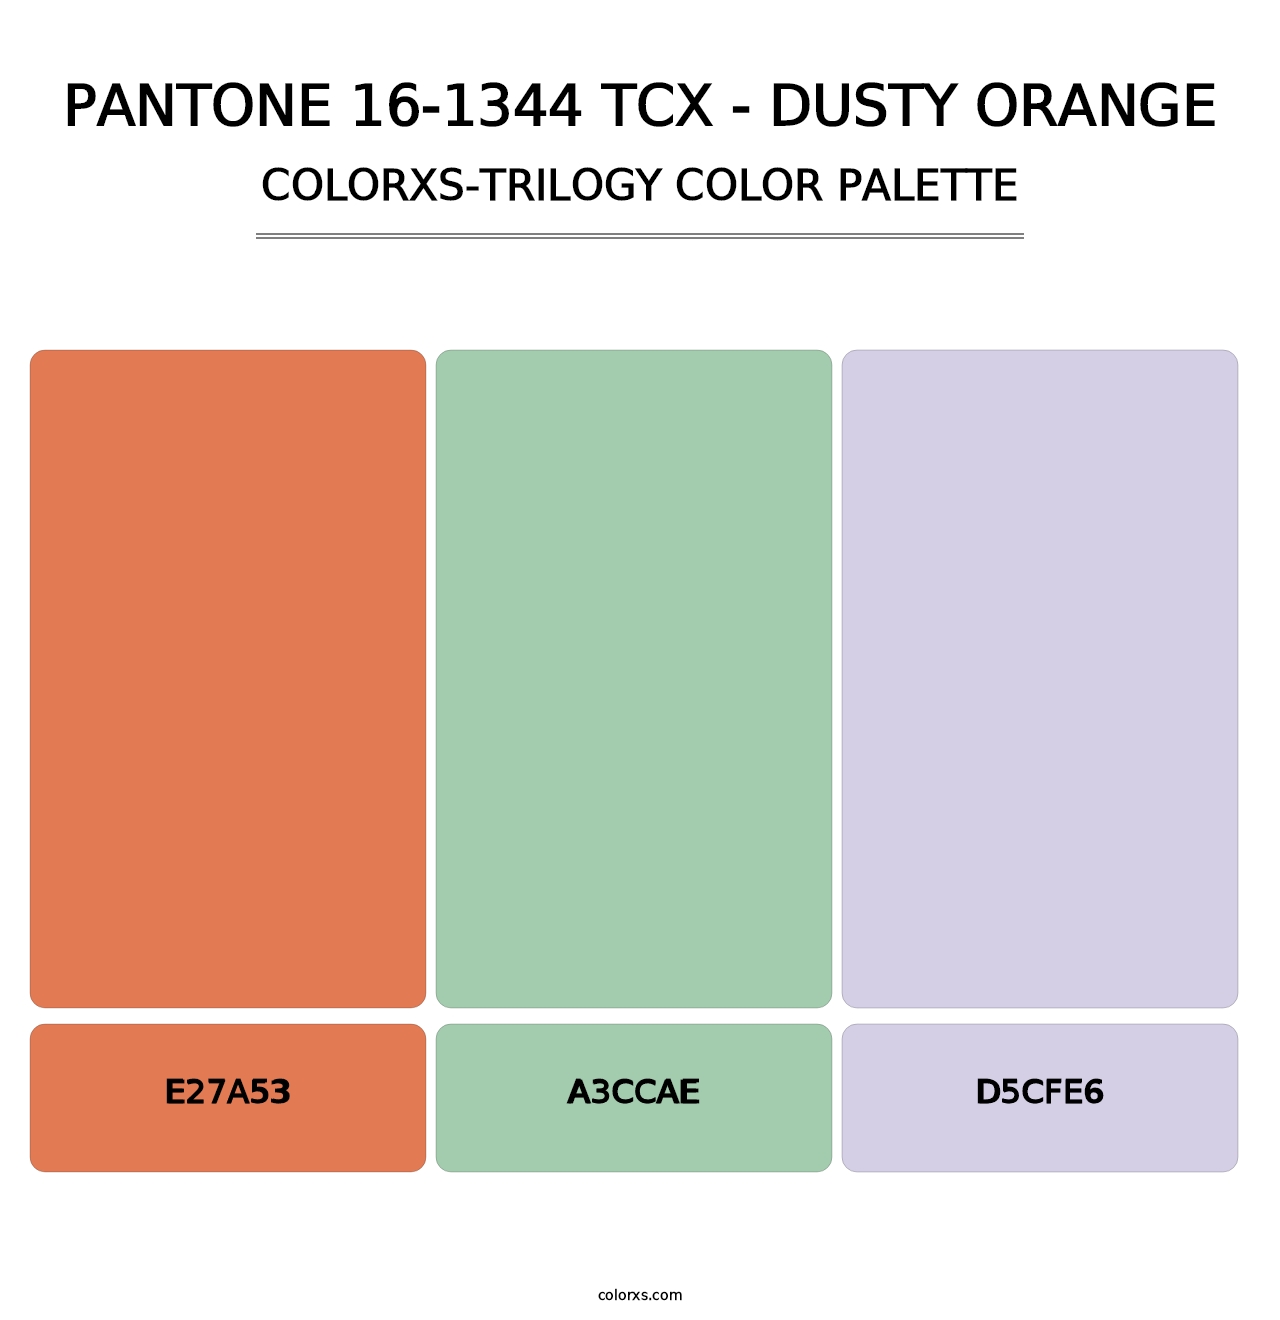 PANTONE 16-1344 TCX - Dusty Orange - Colorxs Trilogy Palette